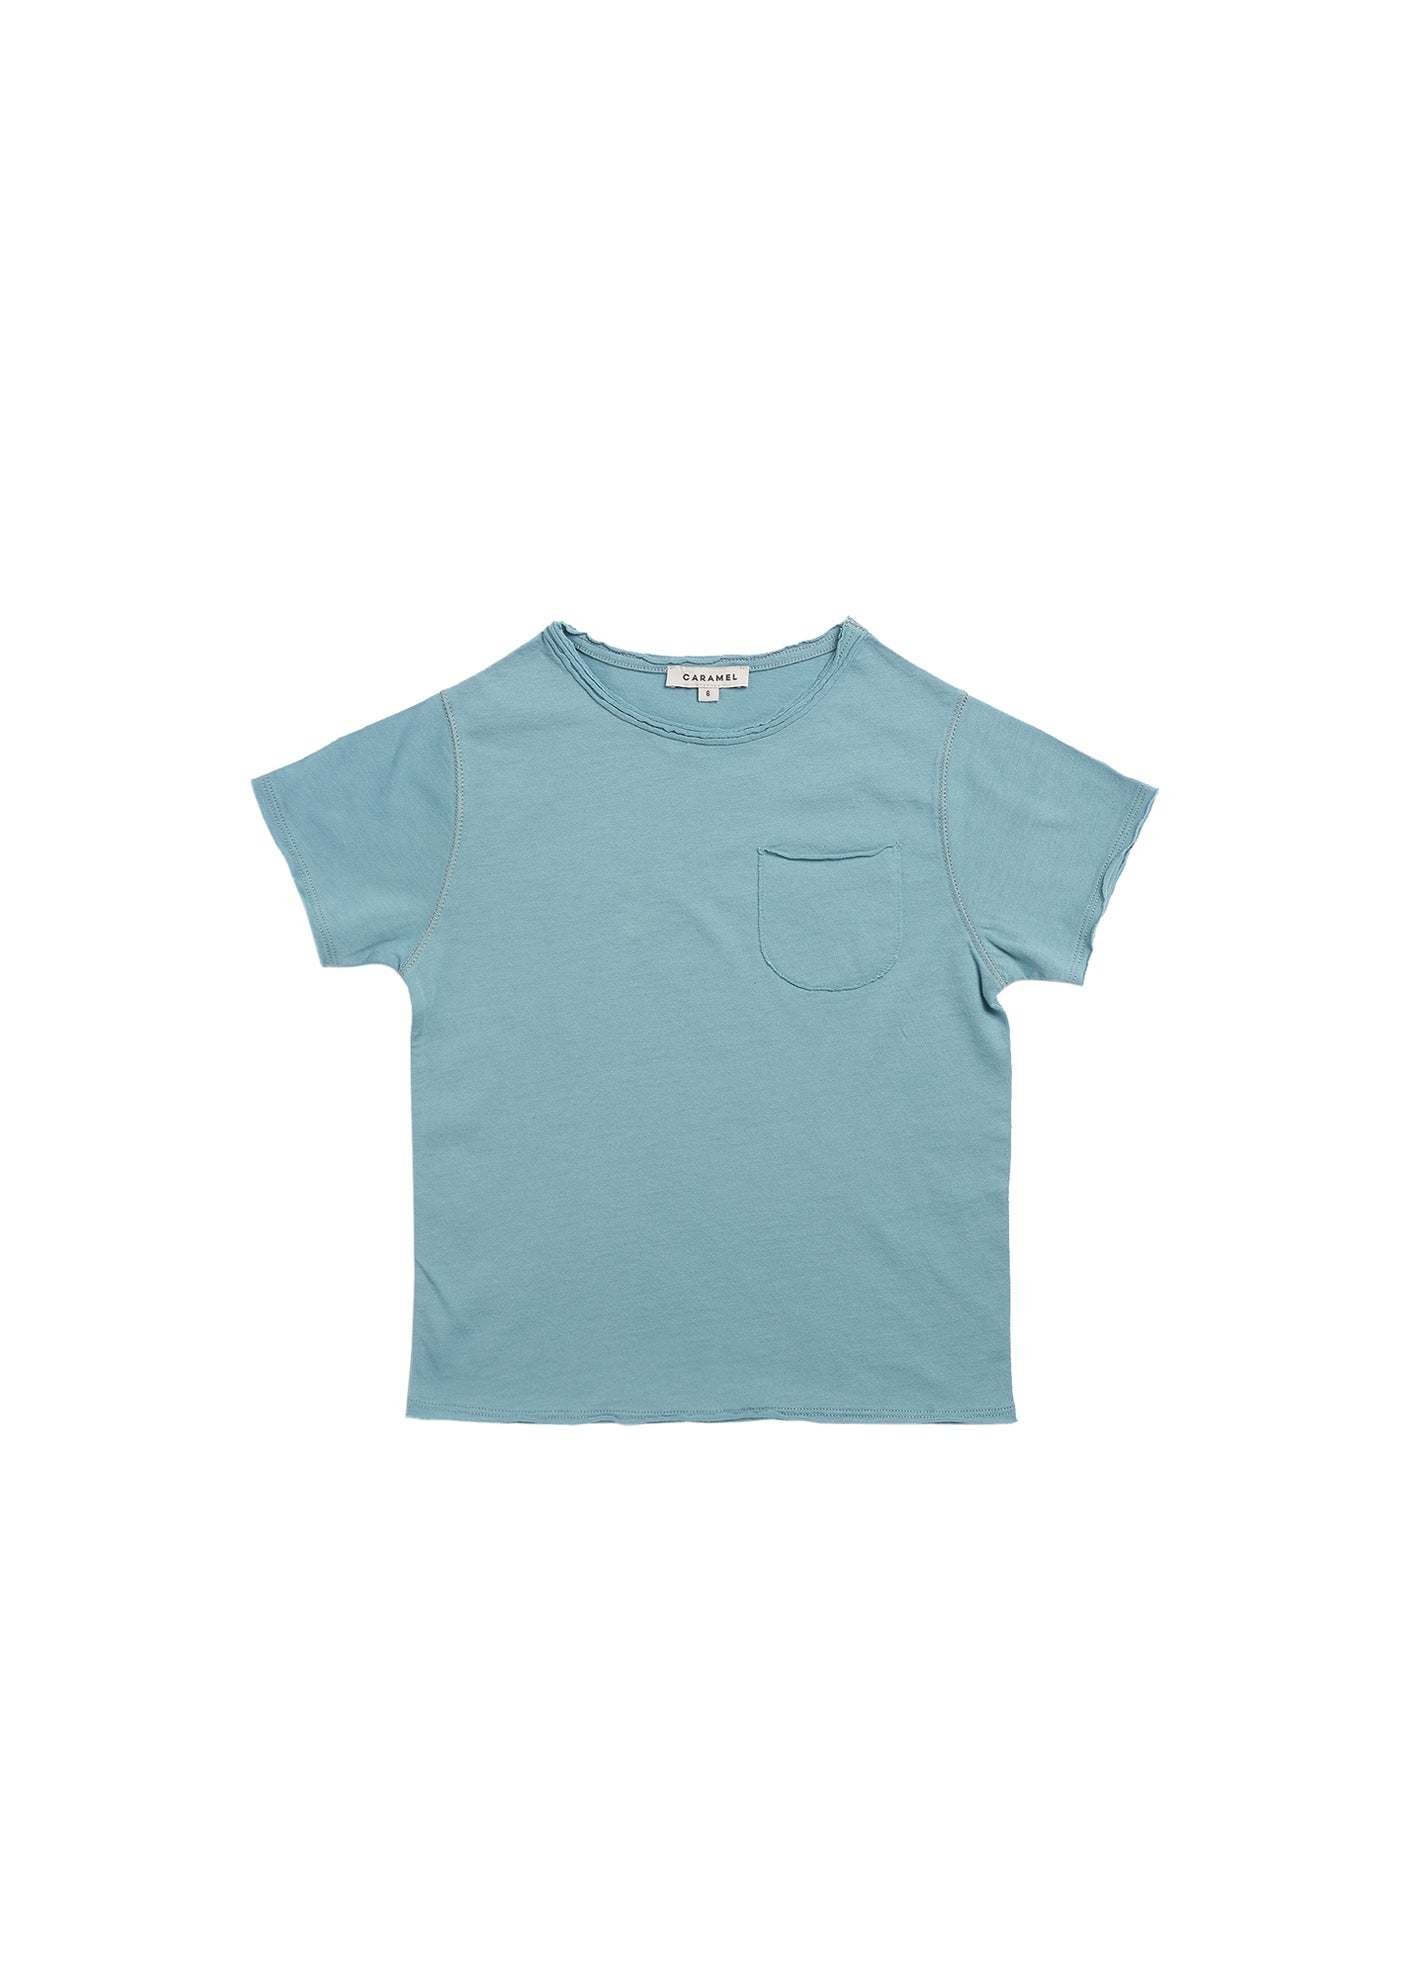 Boys & Girls Blue Cotton T-shirt